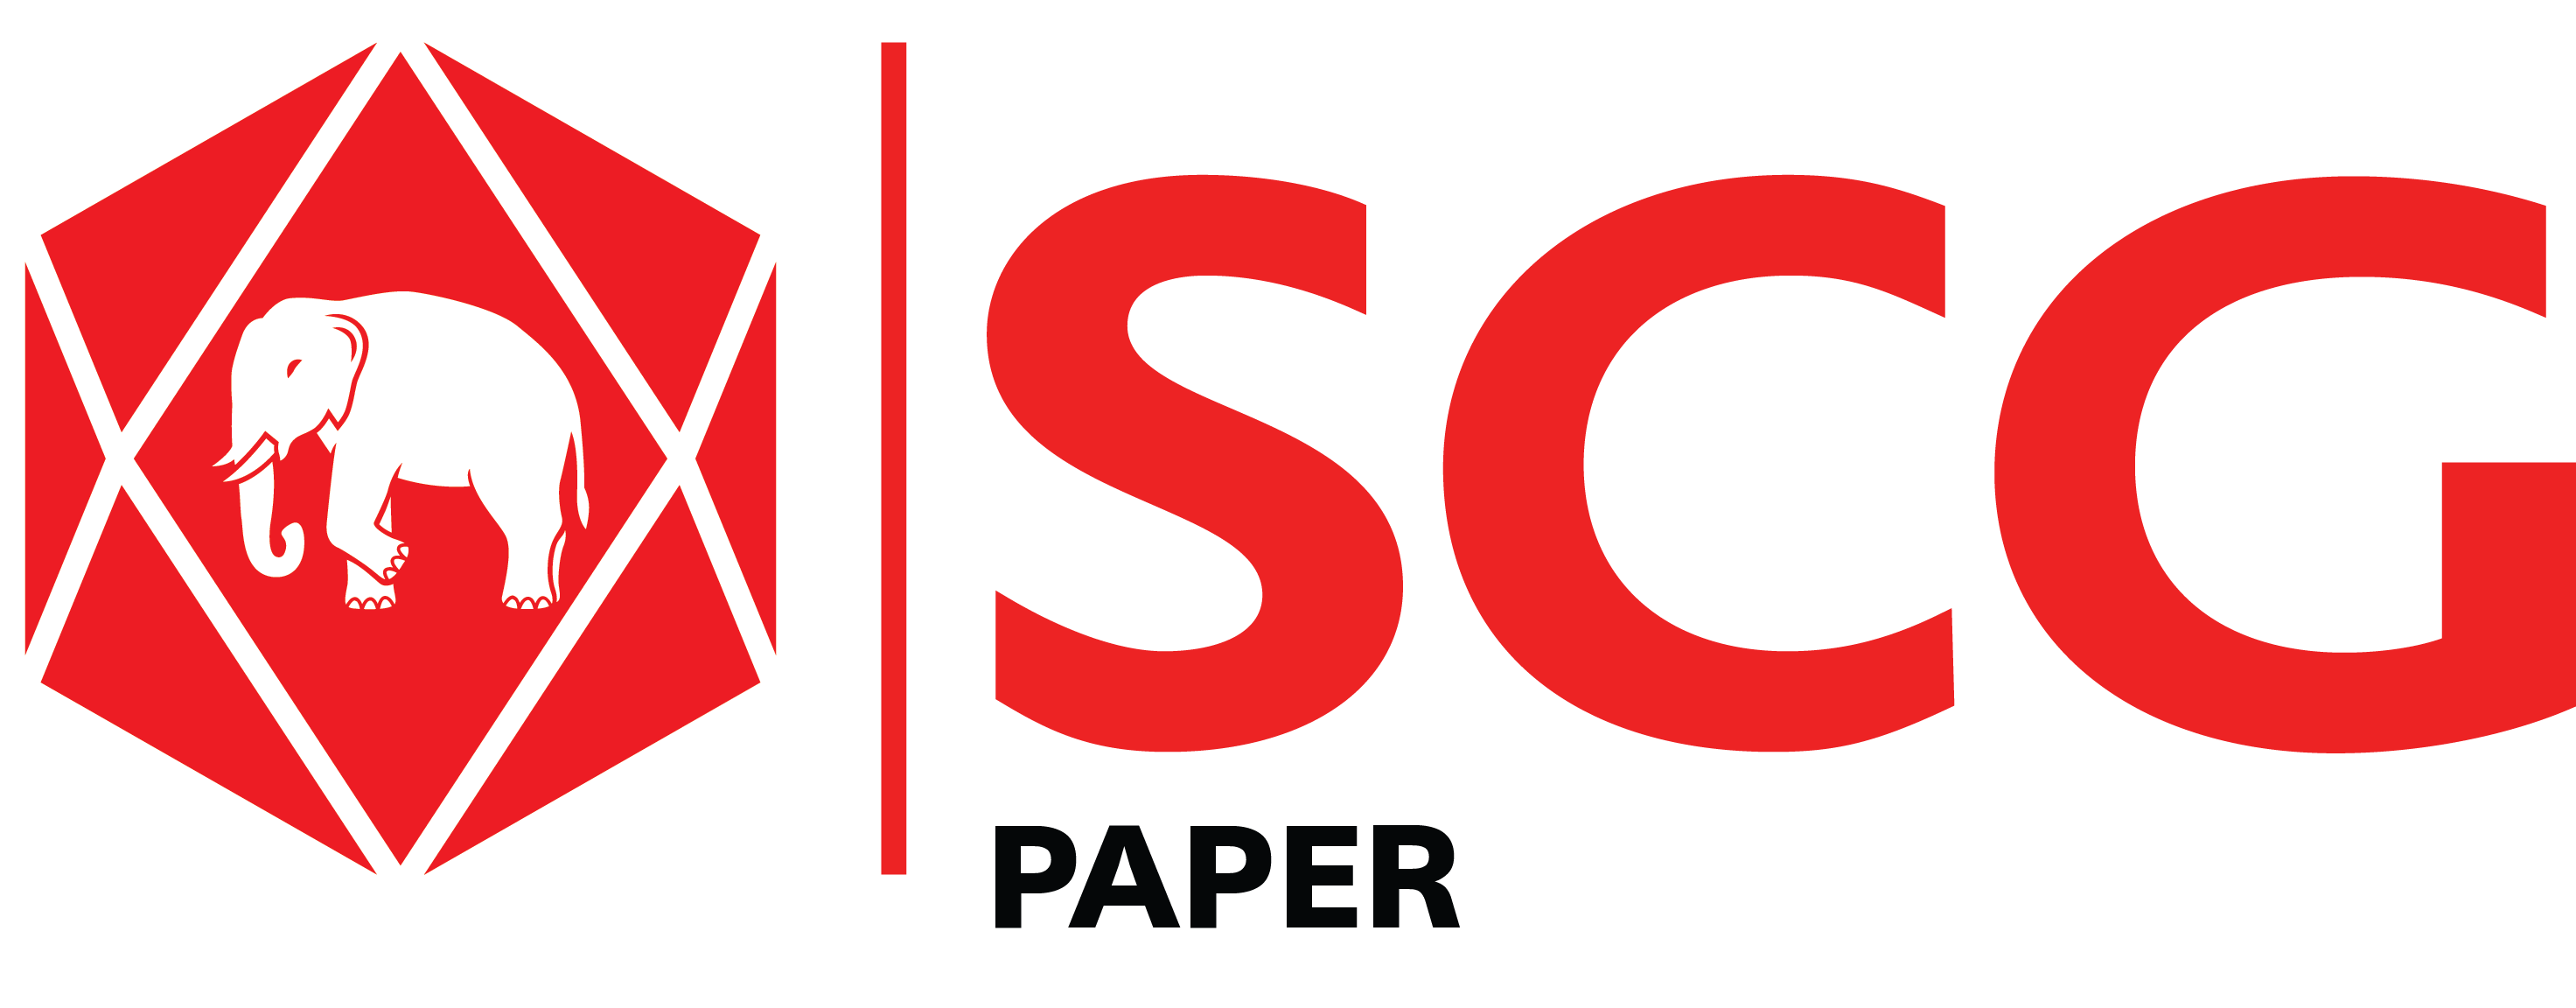 scg_paper_logo